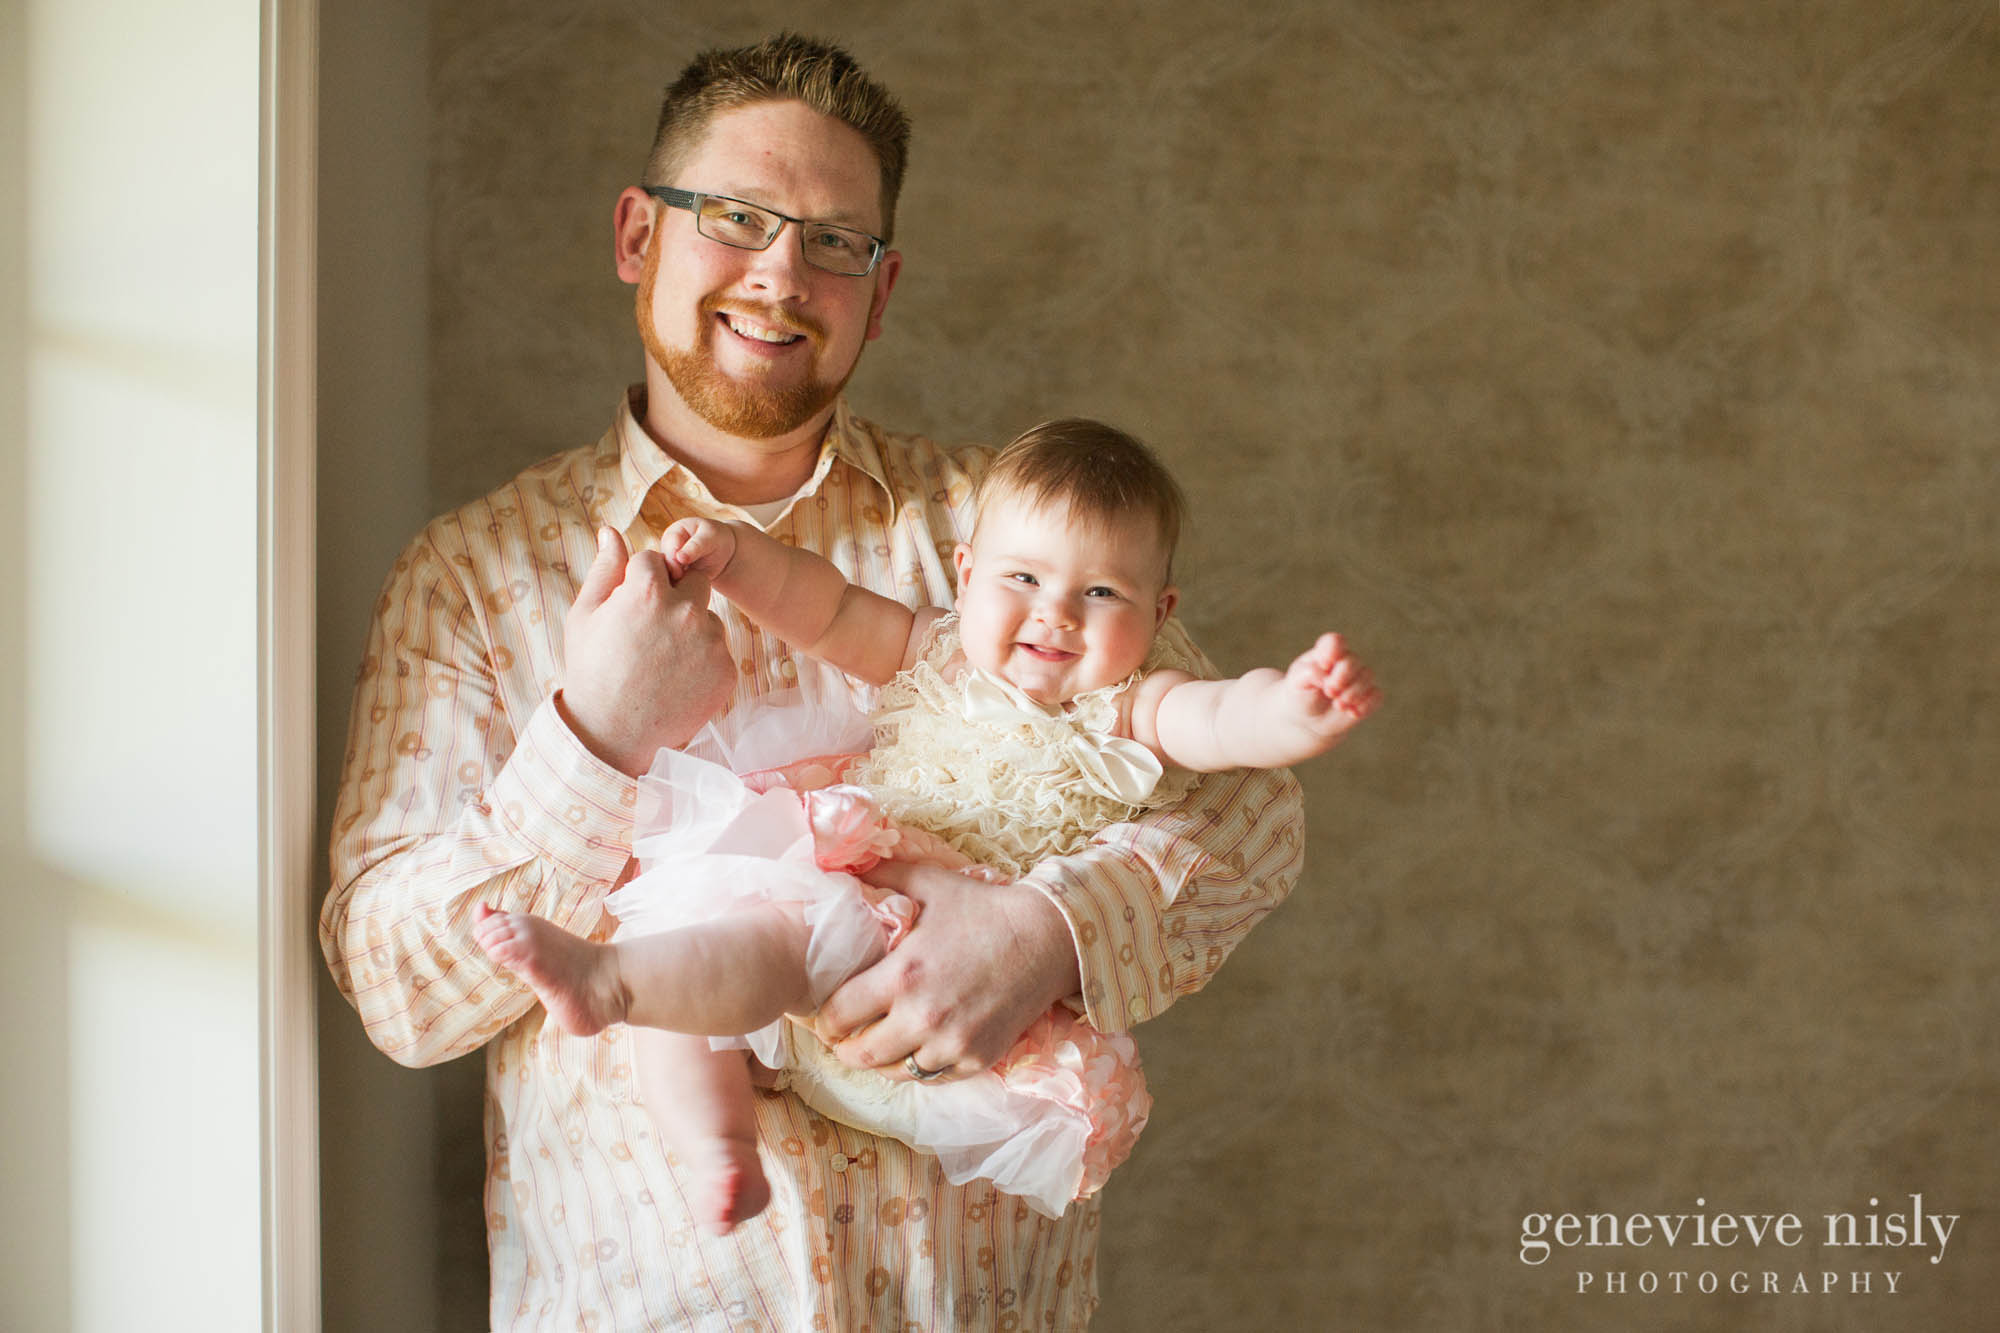  Baby, Copyright Genevieve Nisly Photography, Green, Ohio, Portraits